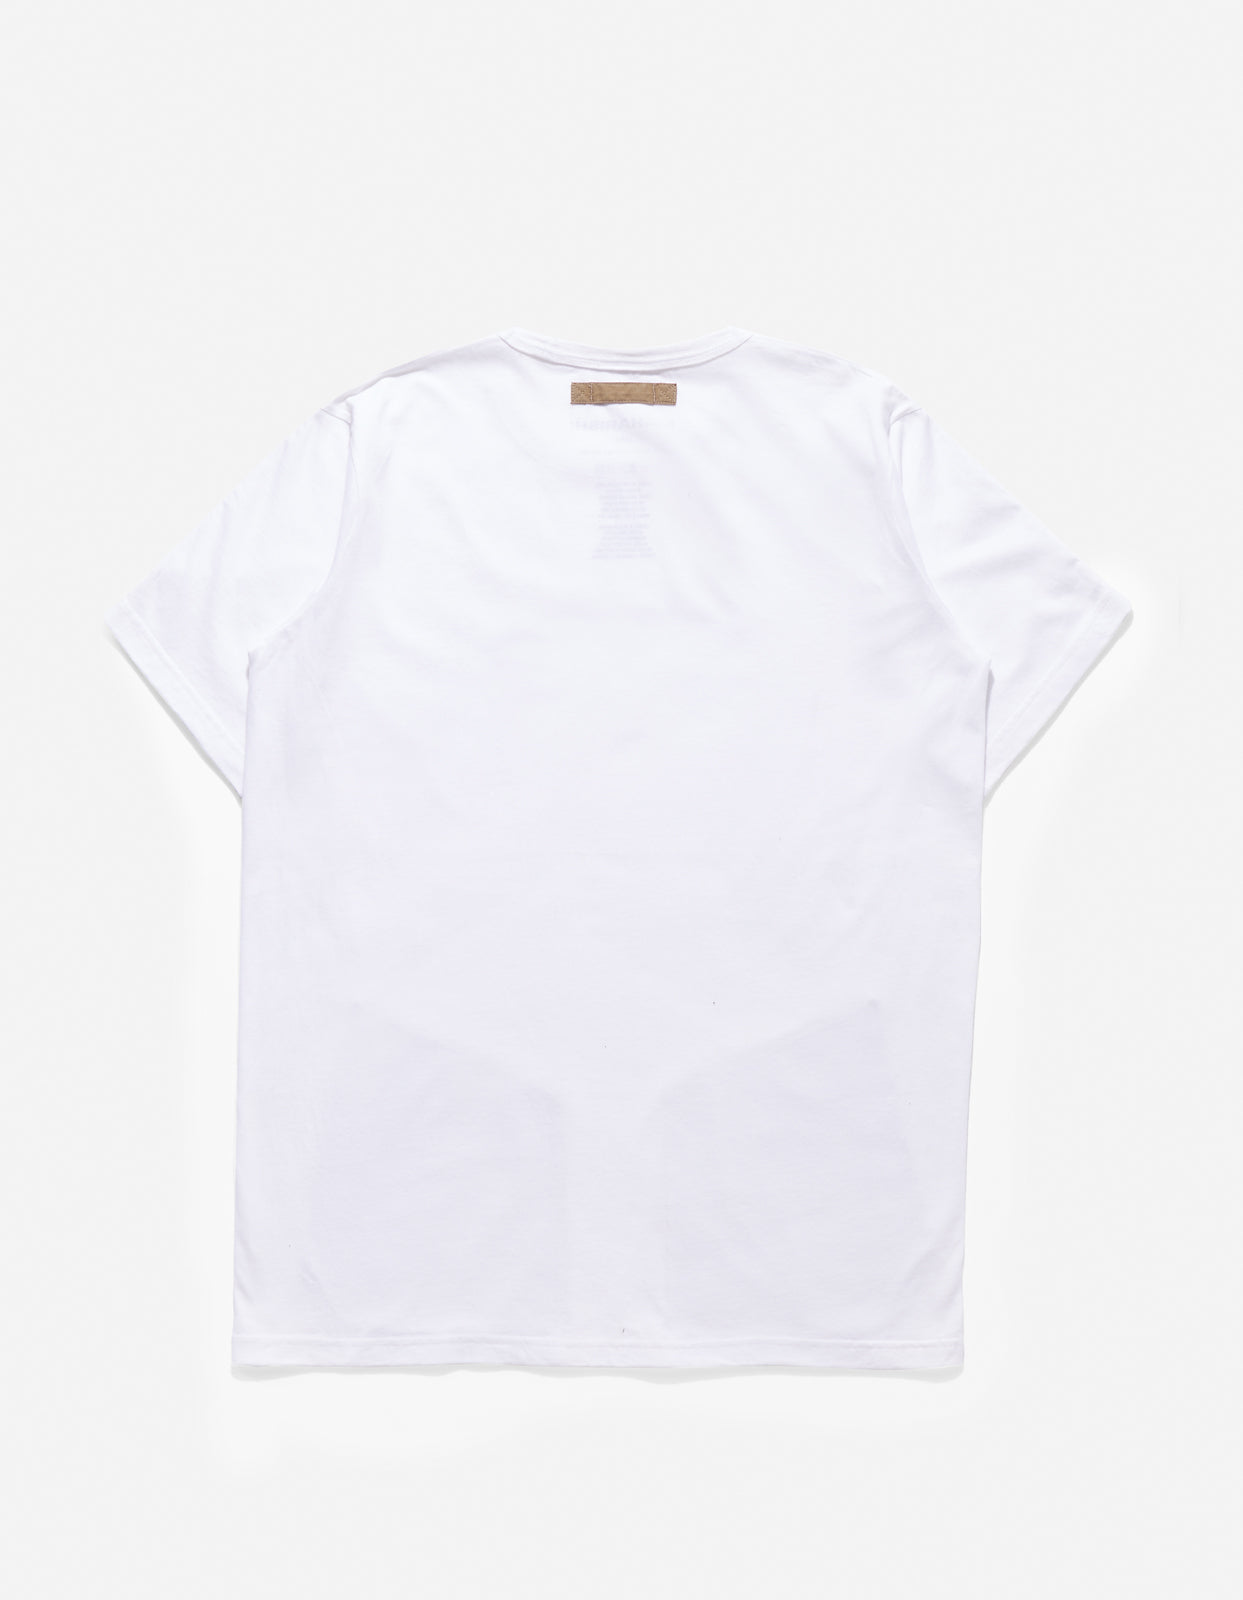 4555 Organic Travel T-Shirt White/Mushroom